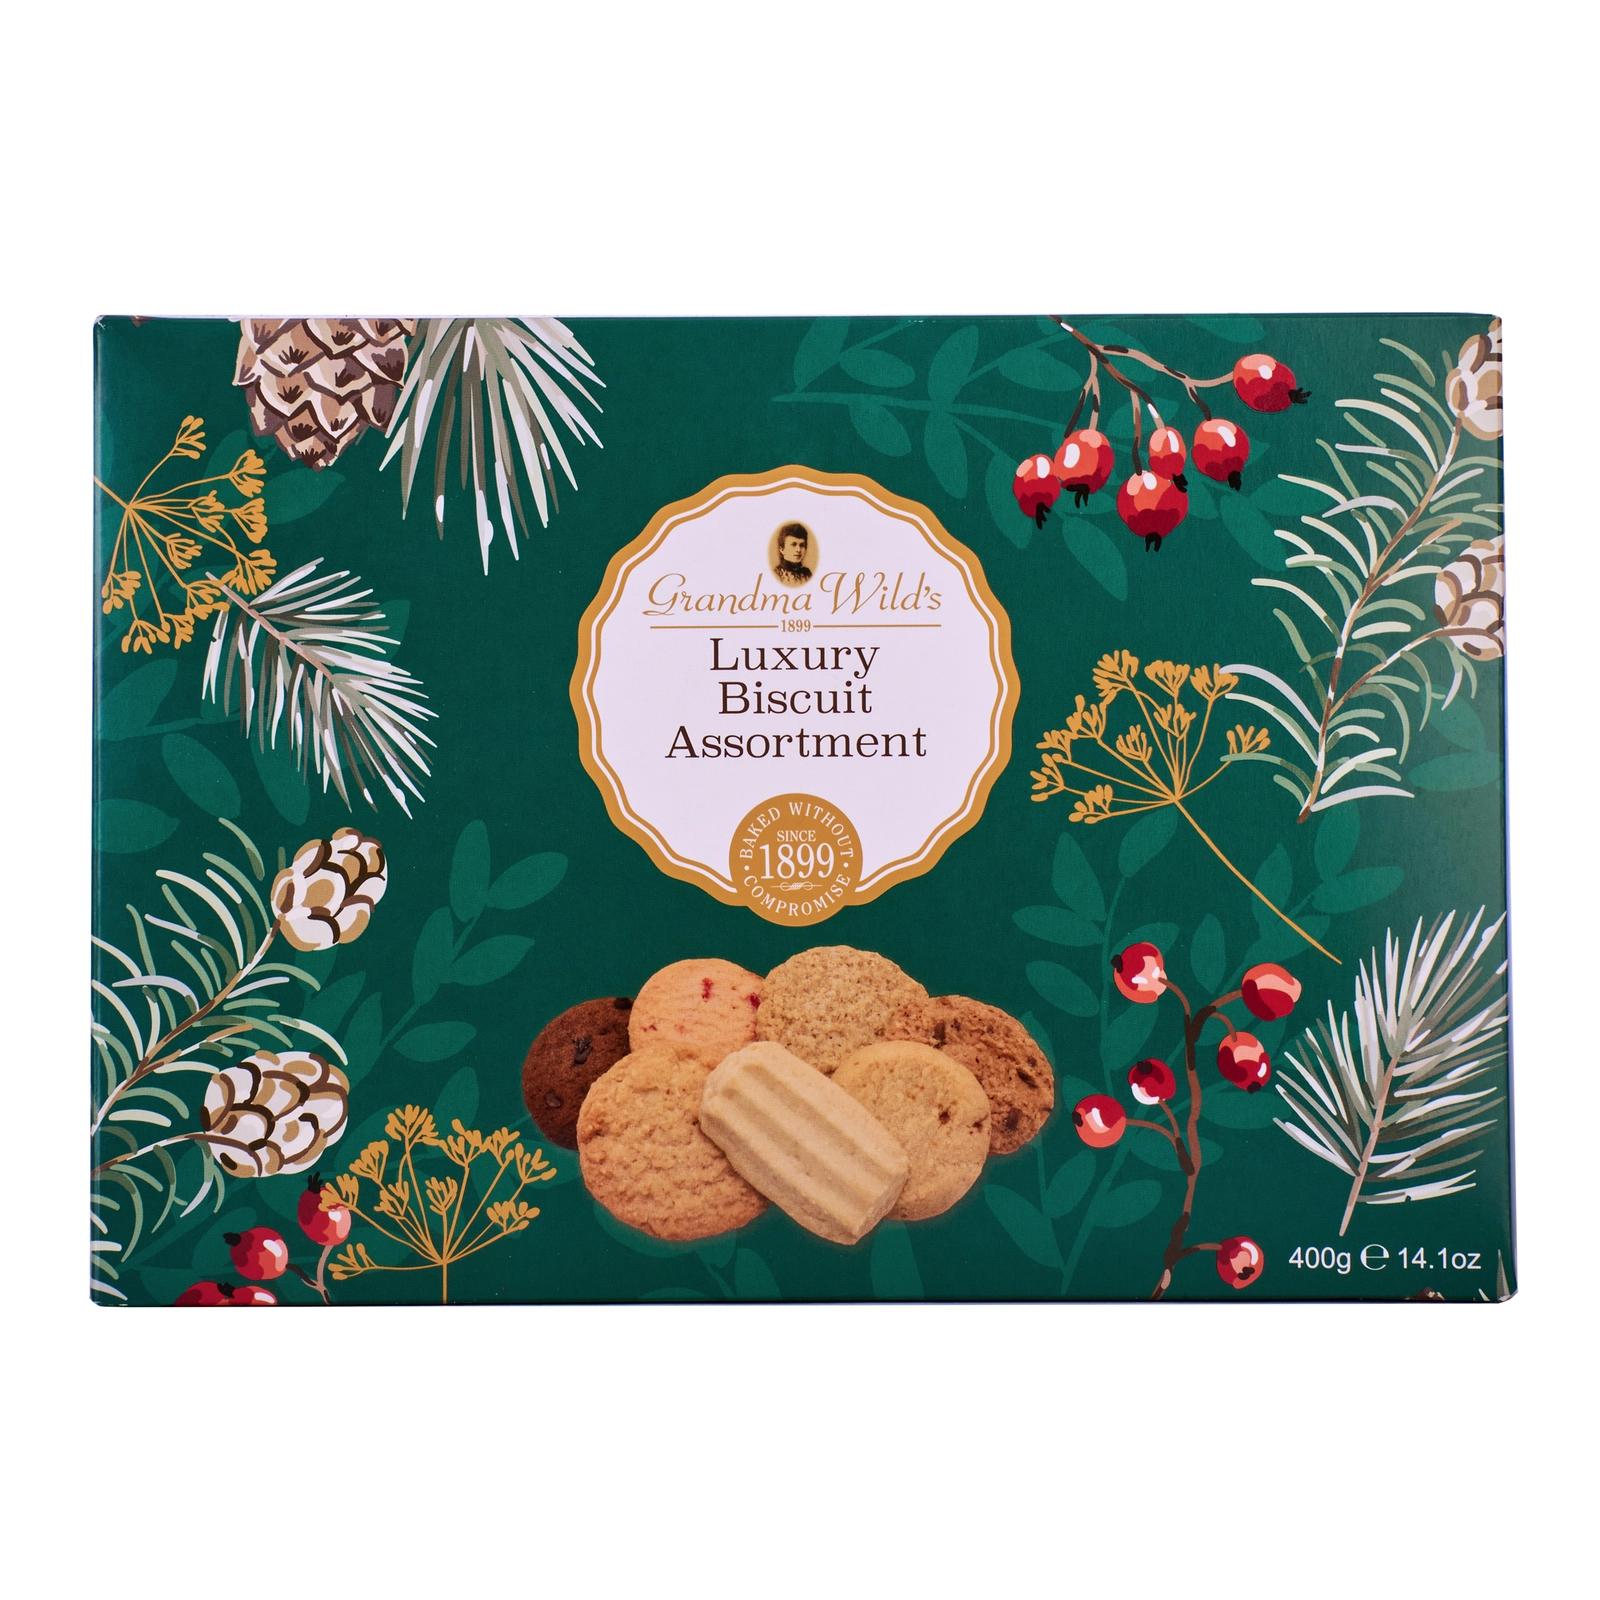 Grandma Wild's Luxury Biscuit Assortment (400g)